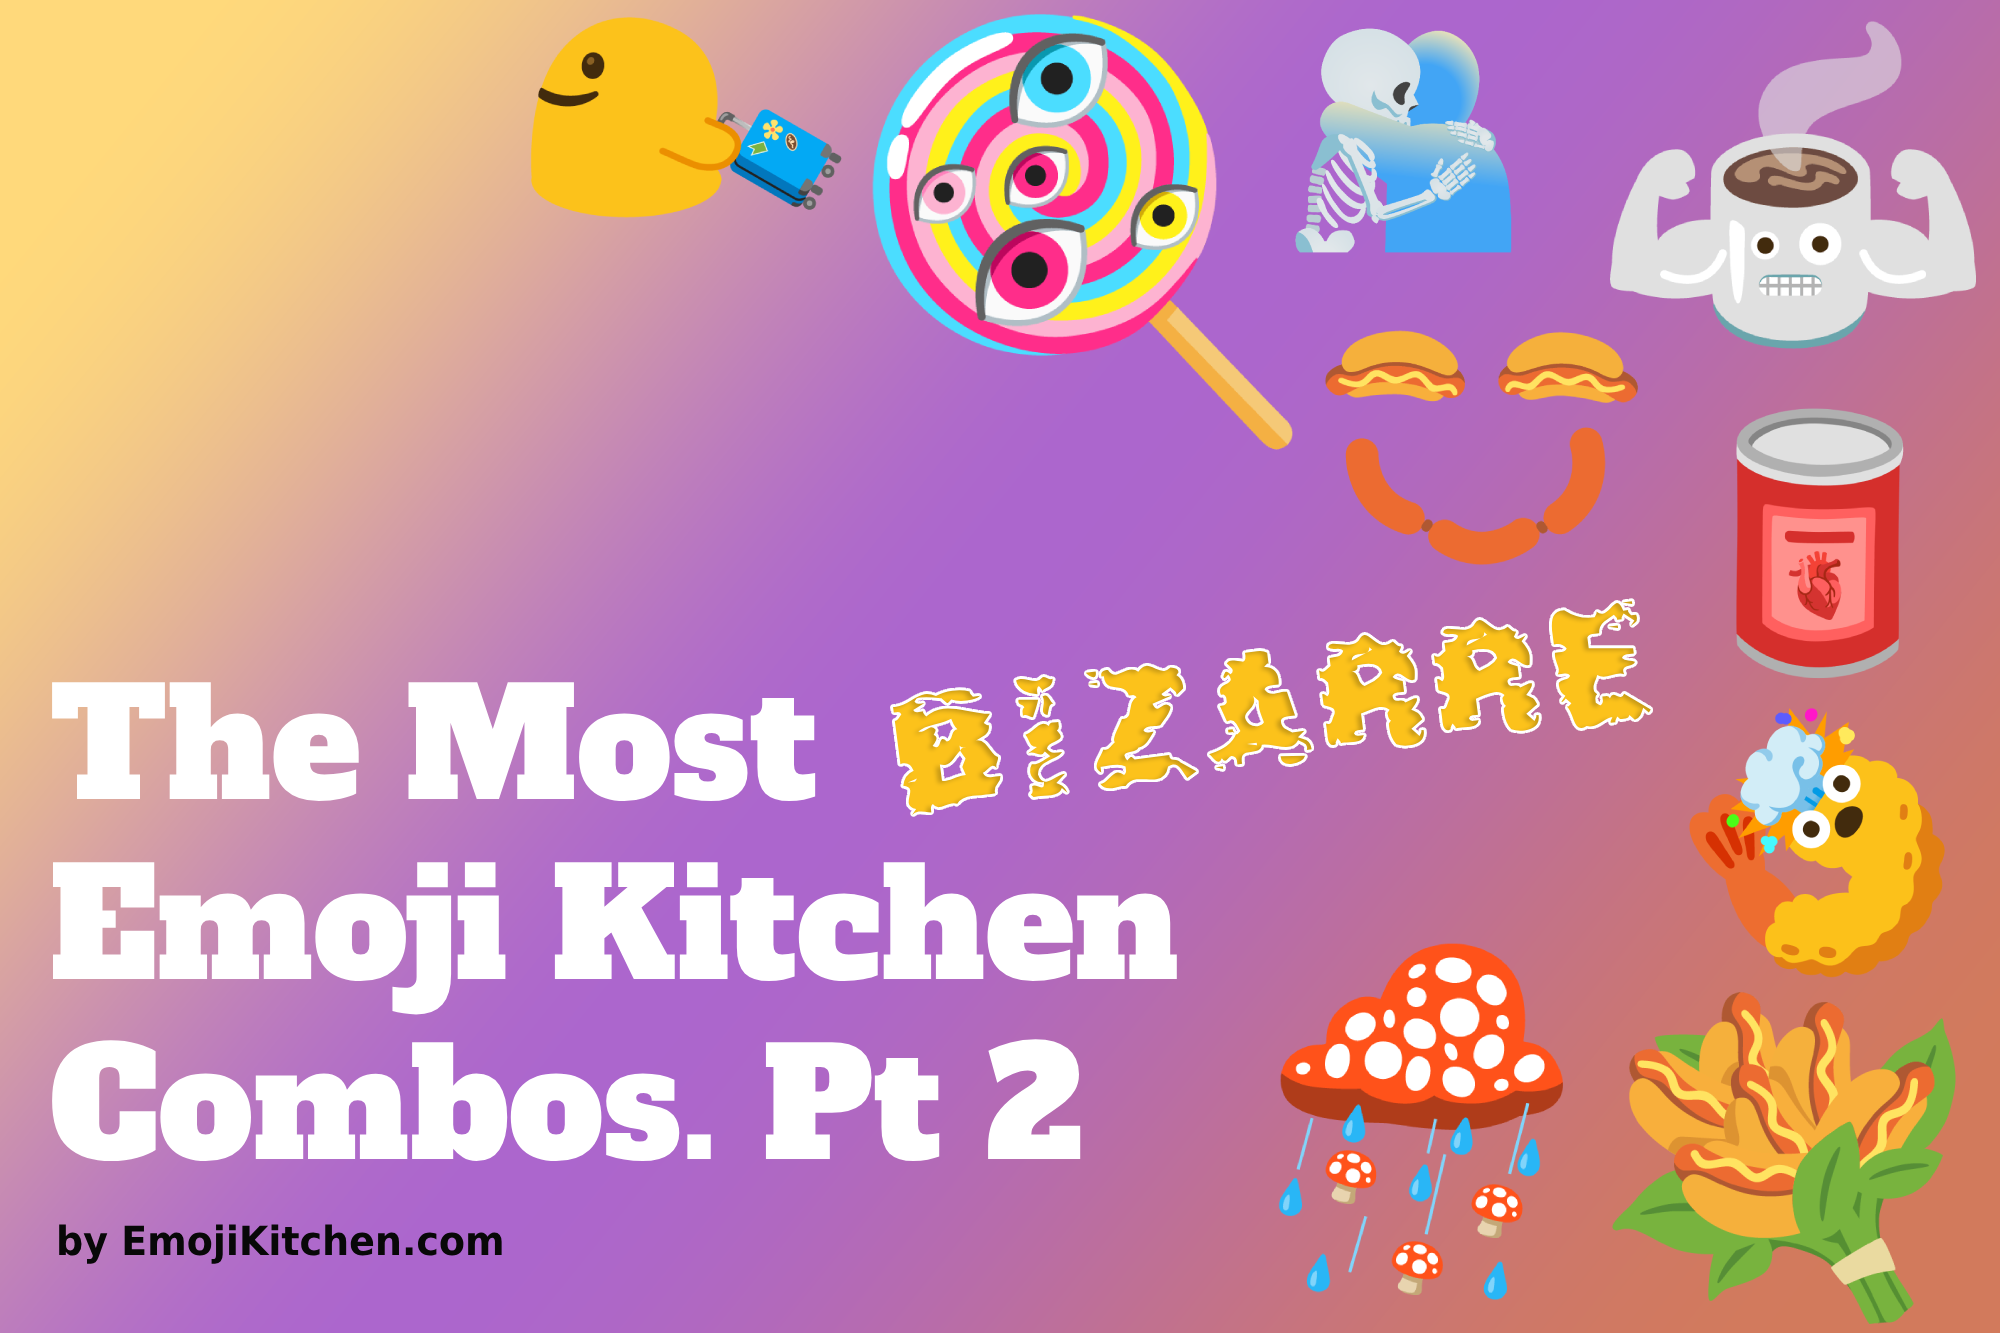 Emoji kitchen combos part 2